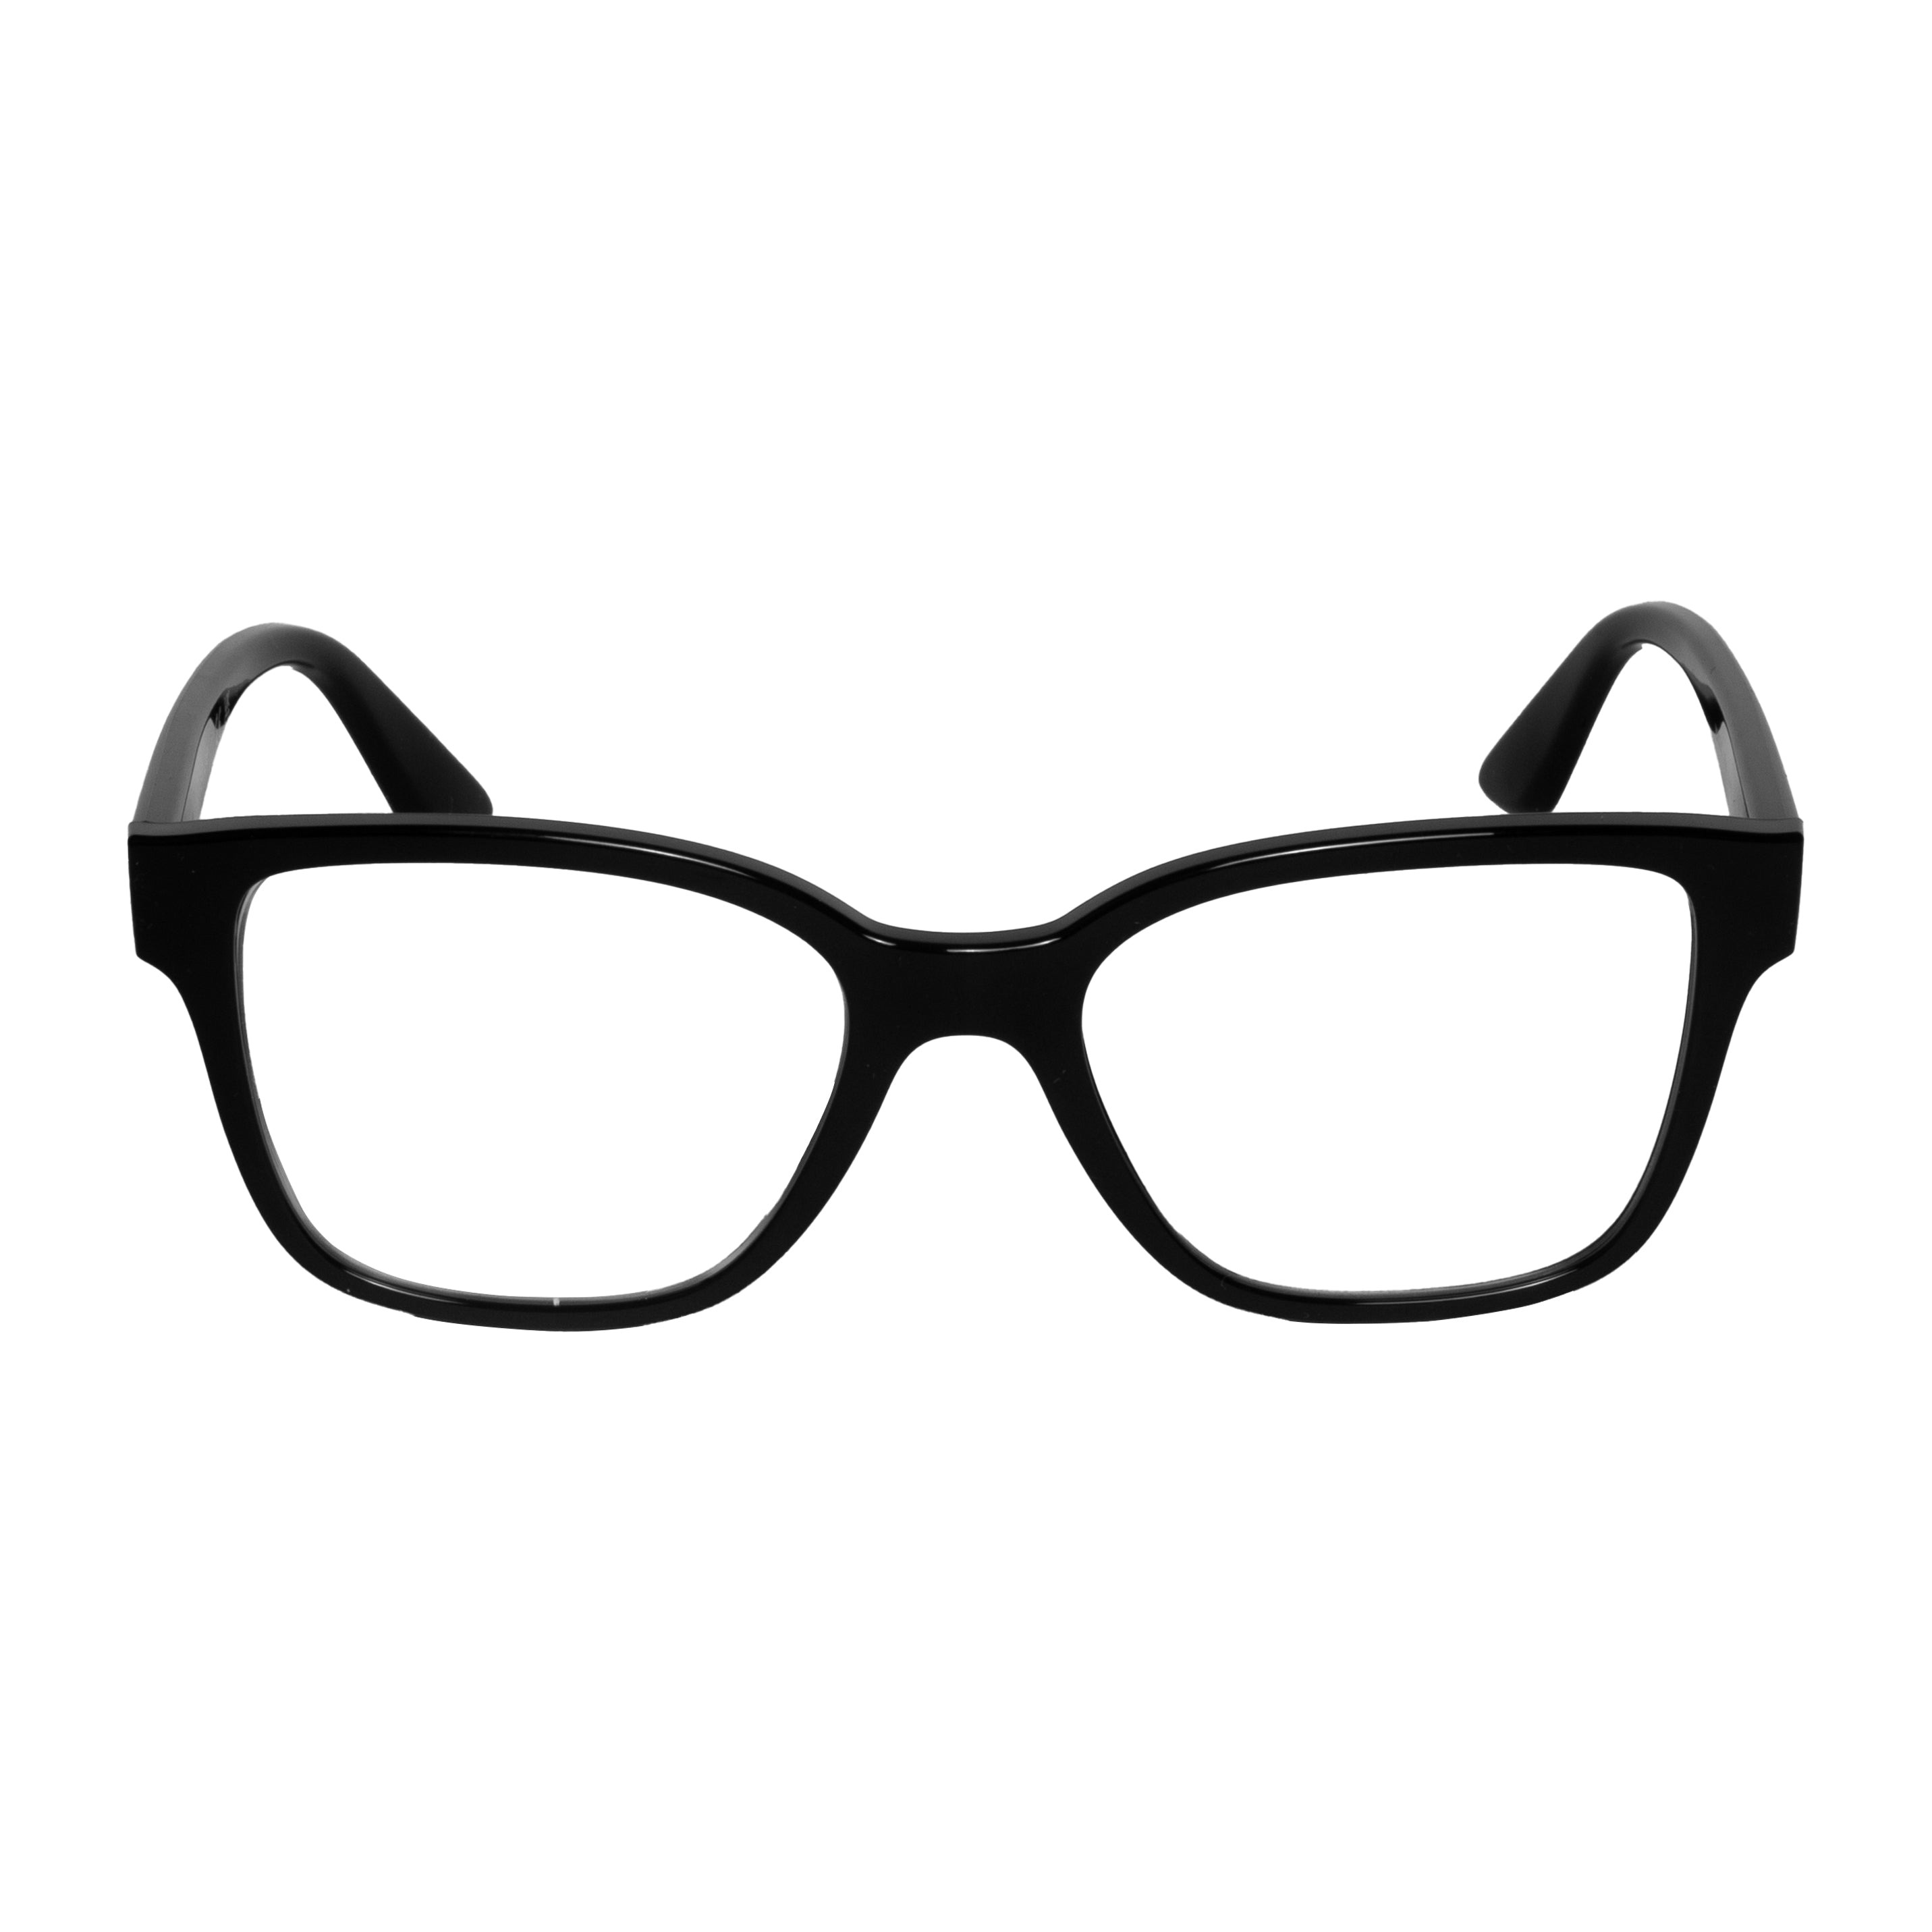 Vogue-VO5452-53-W44 Eyeglasses - Premium Eyeglasses from Vogue - Just Rs. 5190! Shop now at Laxmi Opticians